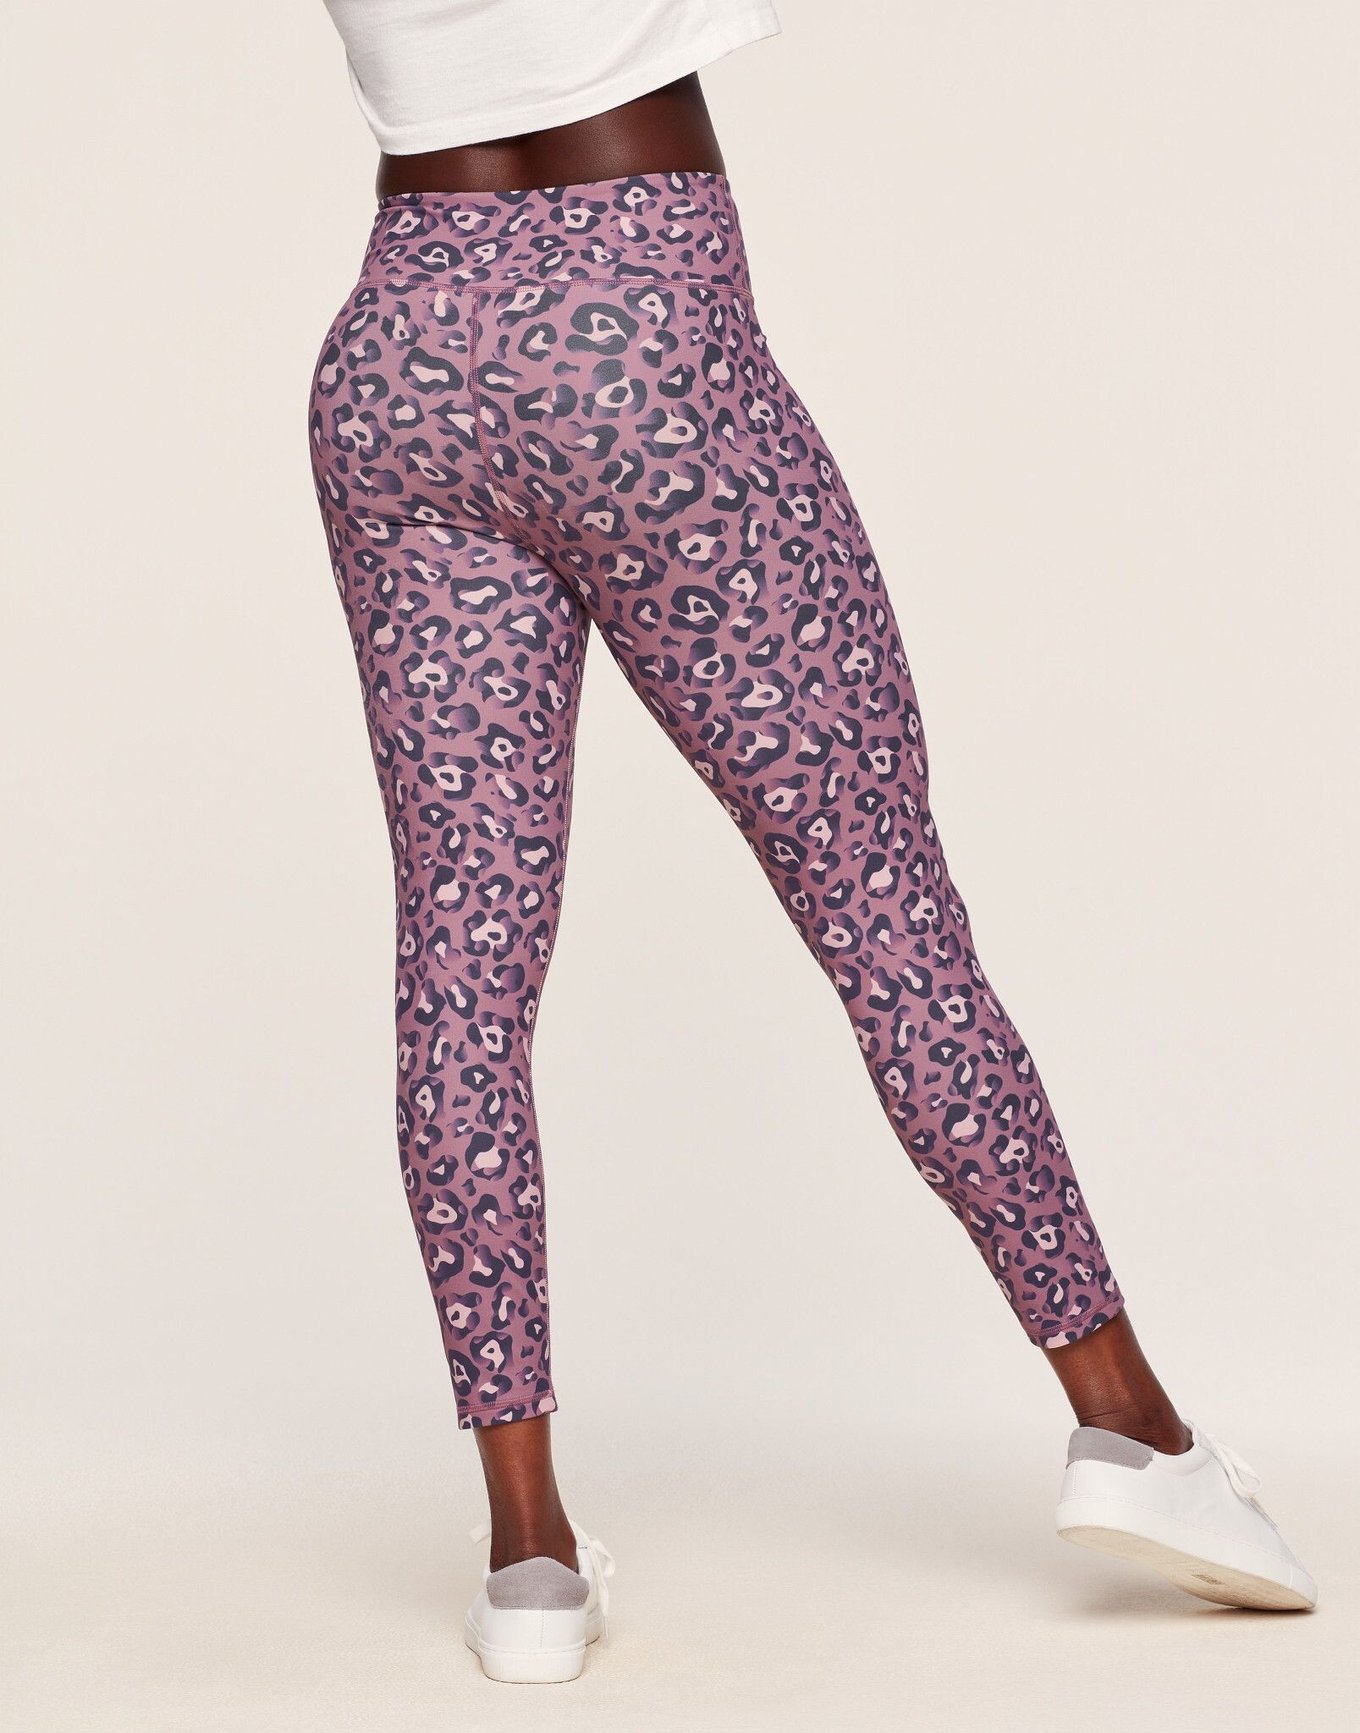 Leggings With Pockets for Women Print Yoga Pant Purple XL